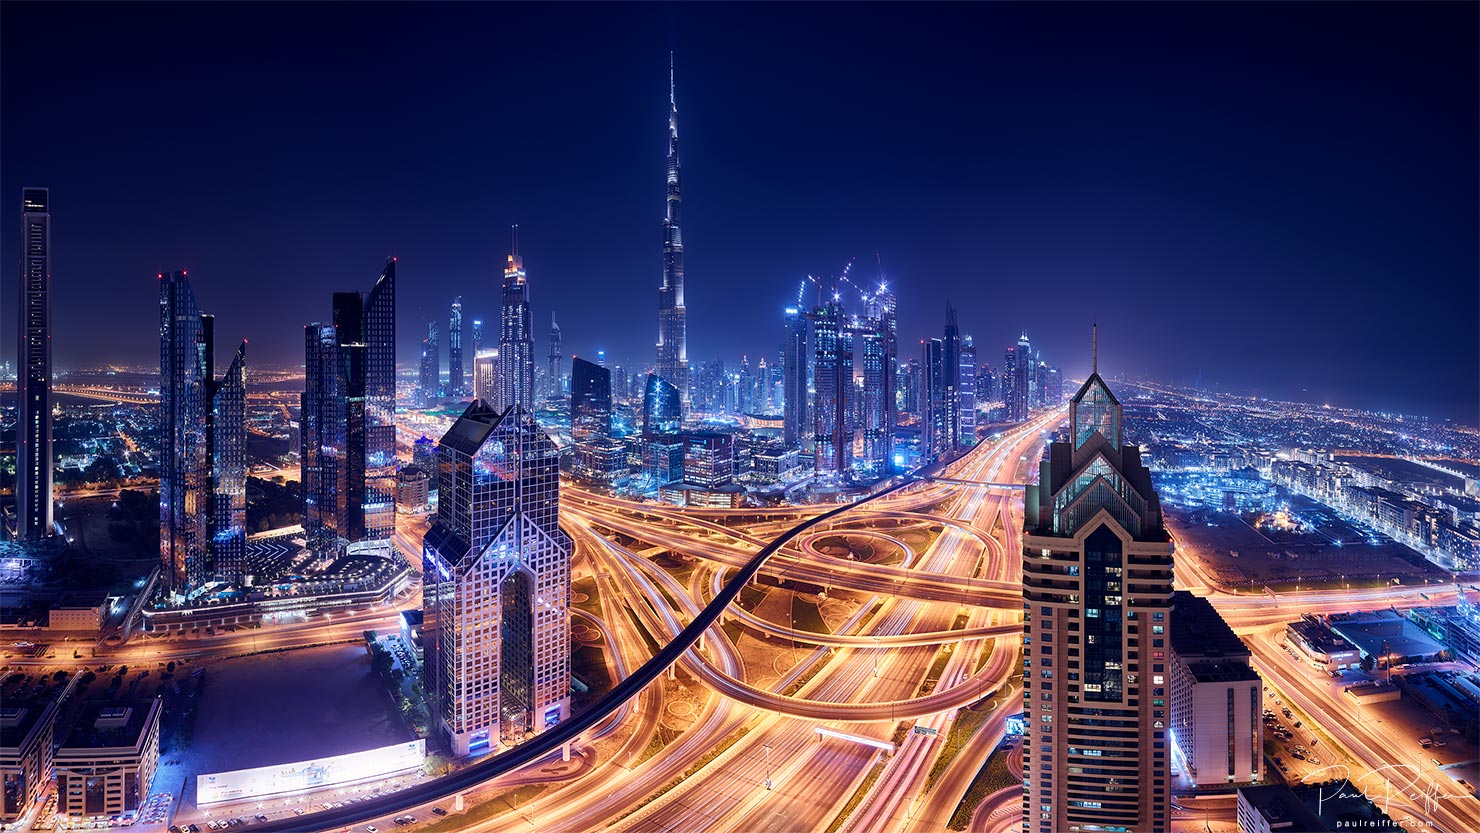 Electric Dreams Dubai Intersection Sheikh Zayed Road Financial Center Burj Khalifa Shangri La Paul Reiffer Dusit Thani Photographer